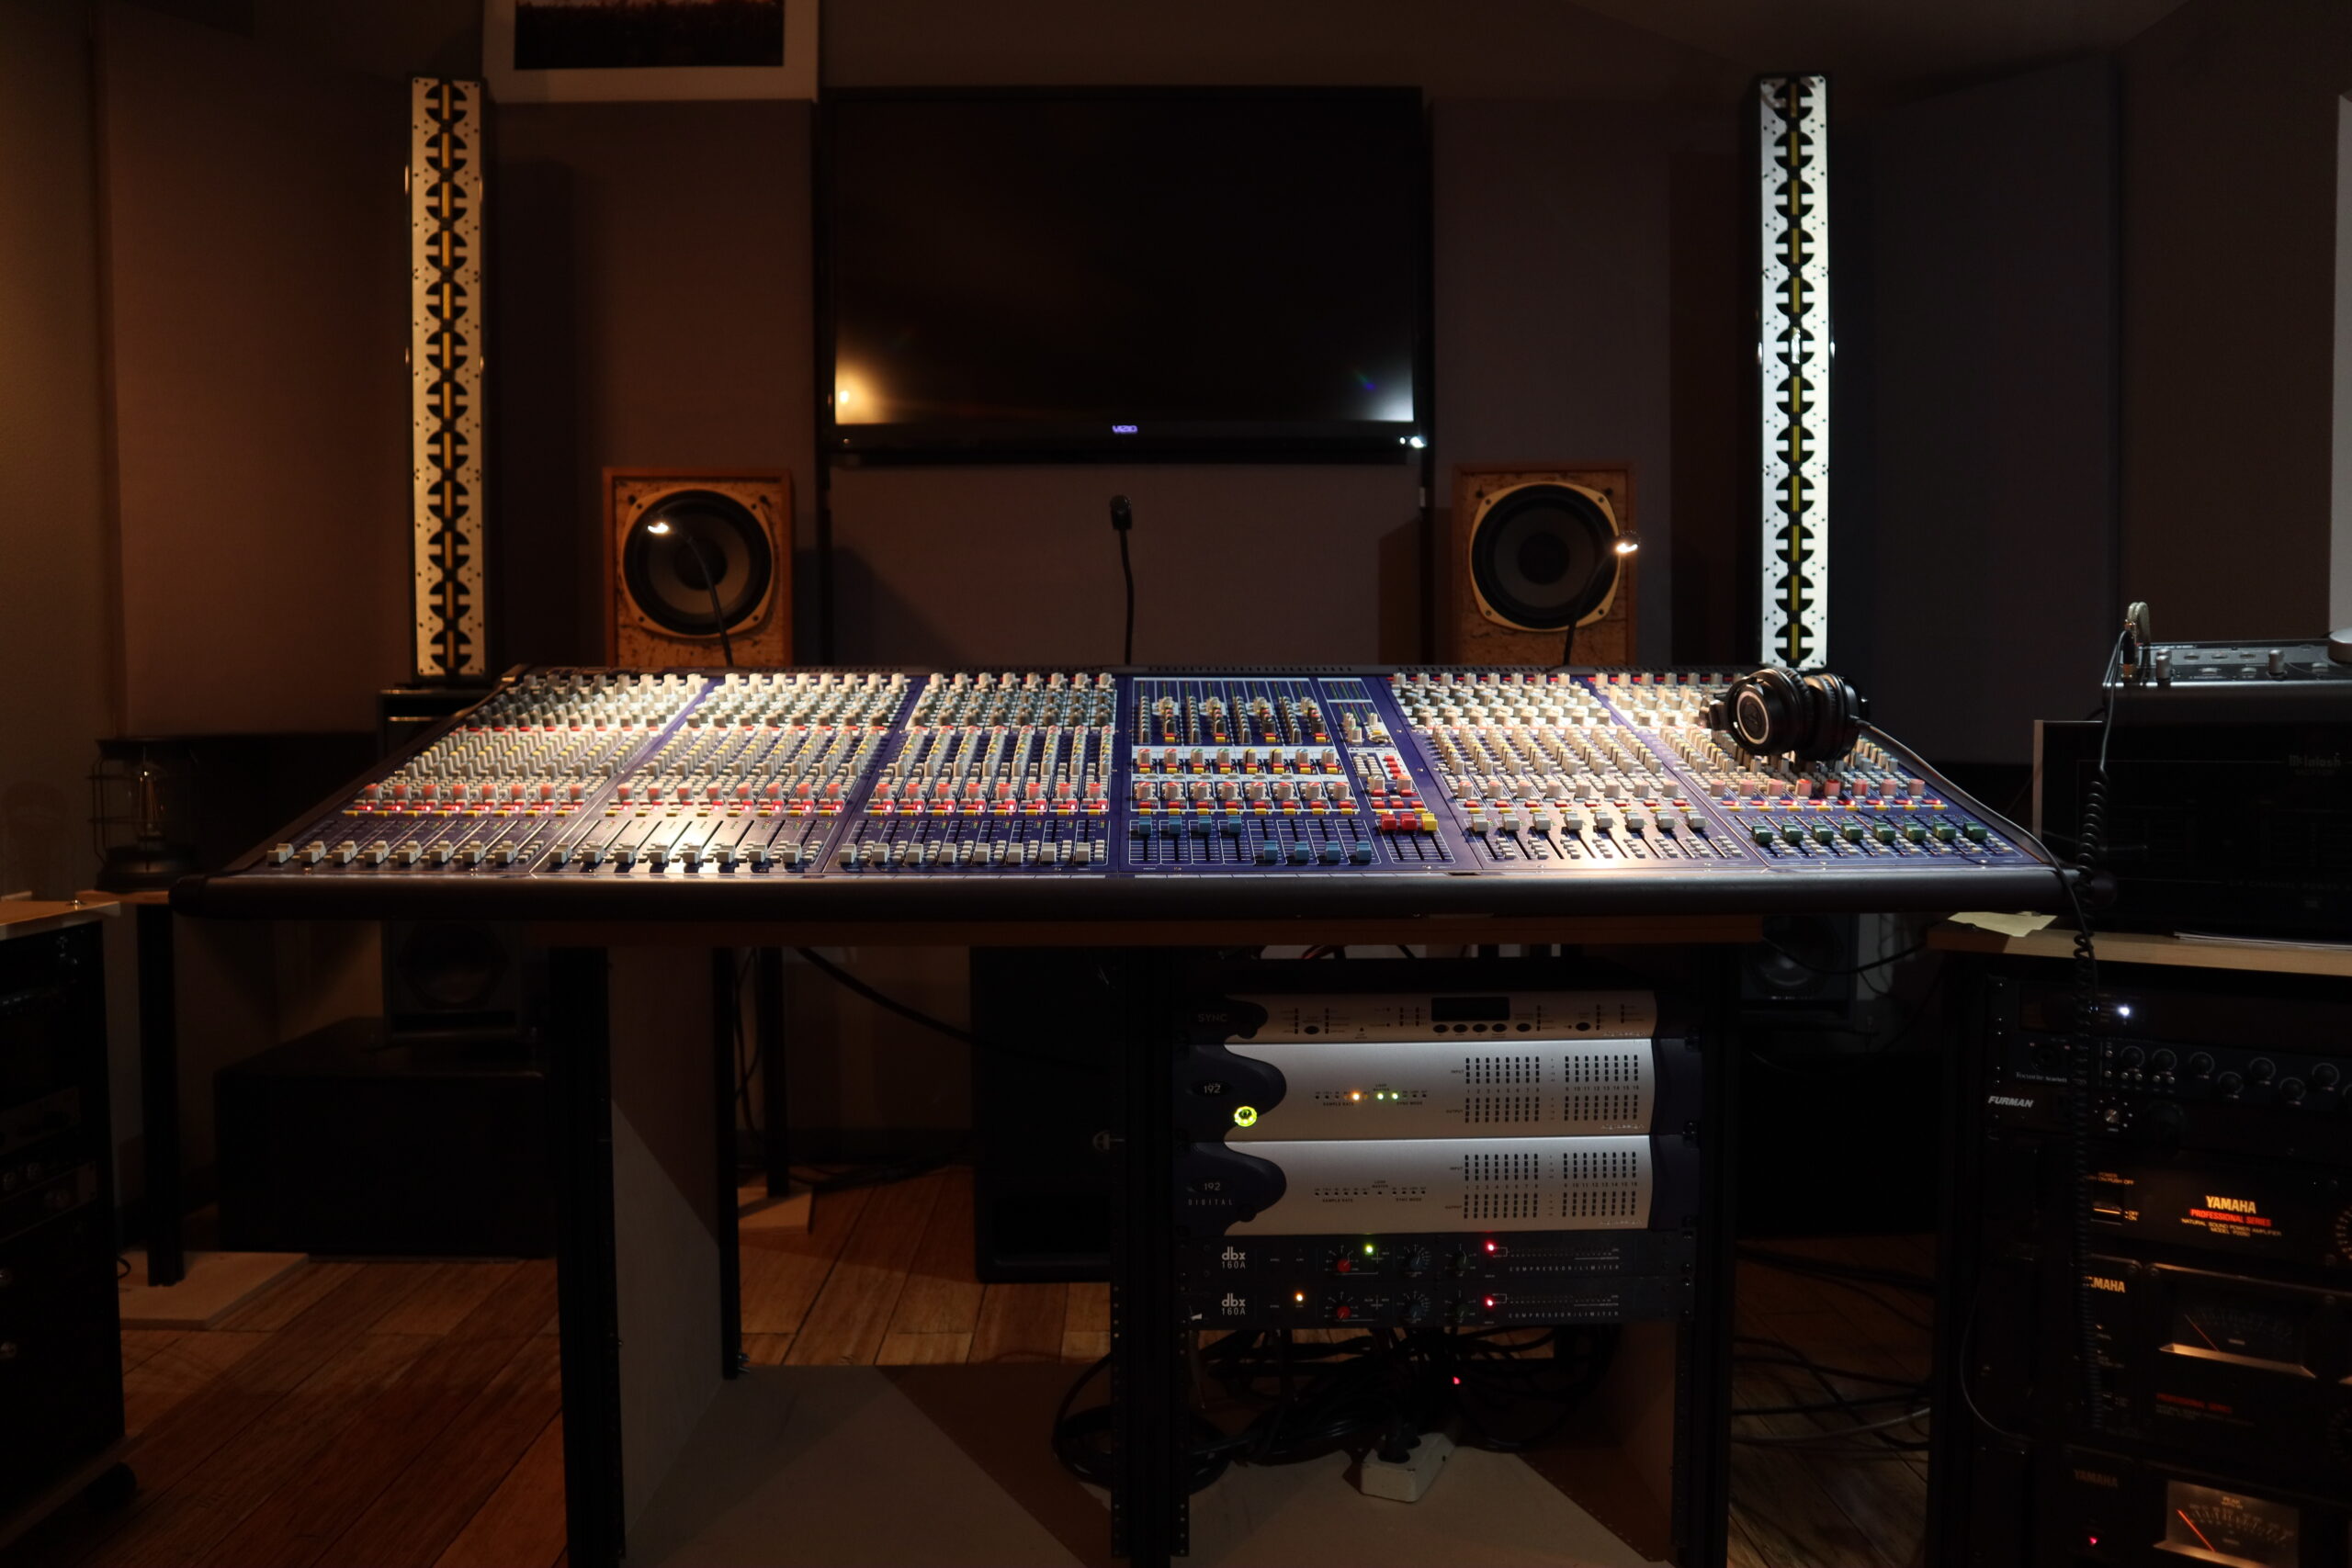 Midas Verona Mixing Console and Studio Speakers